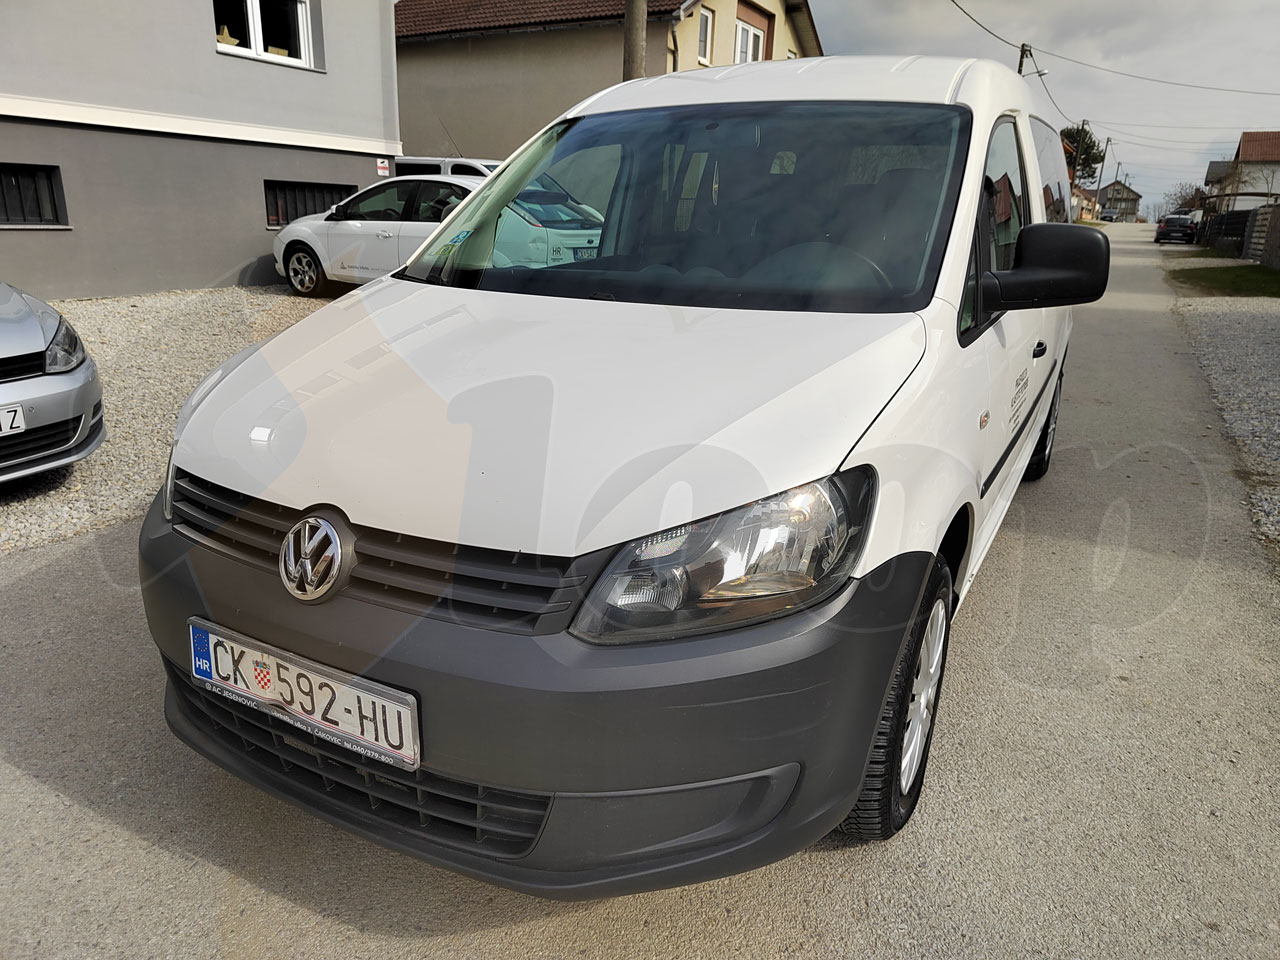 VW Caddy Maxi 1.6 TDI / 2014 / ČK 592 HU